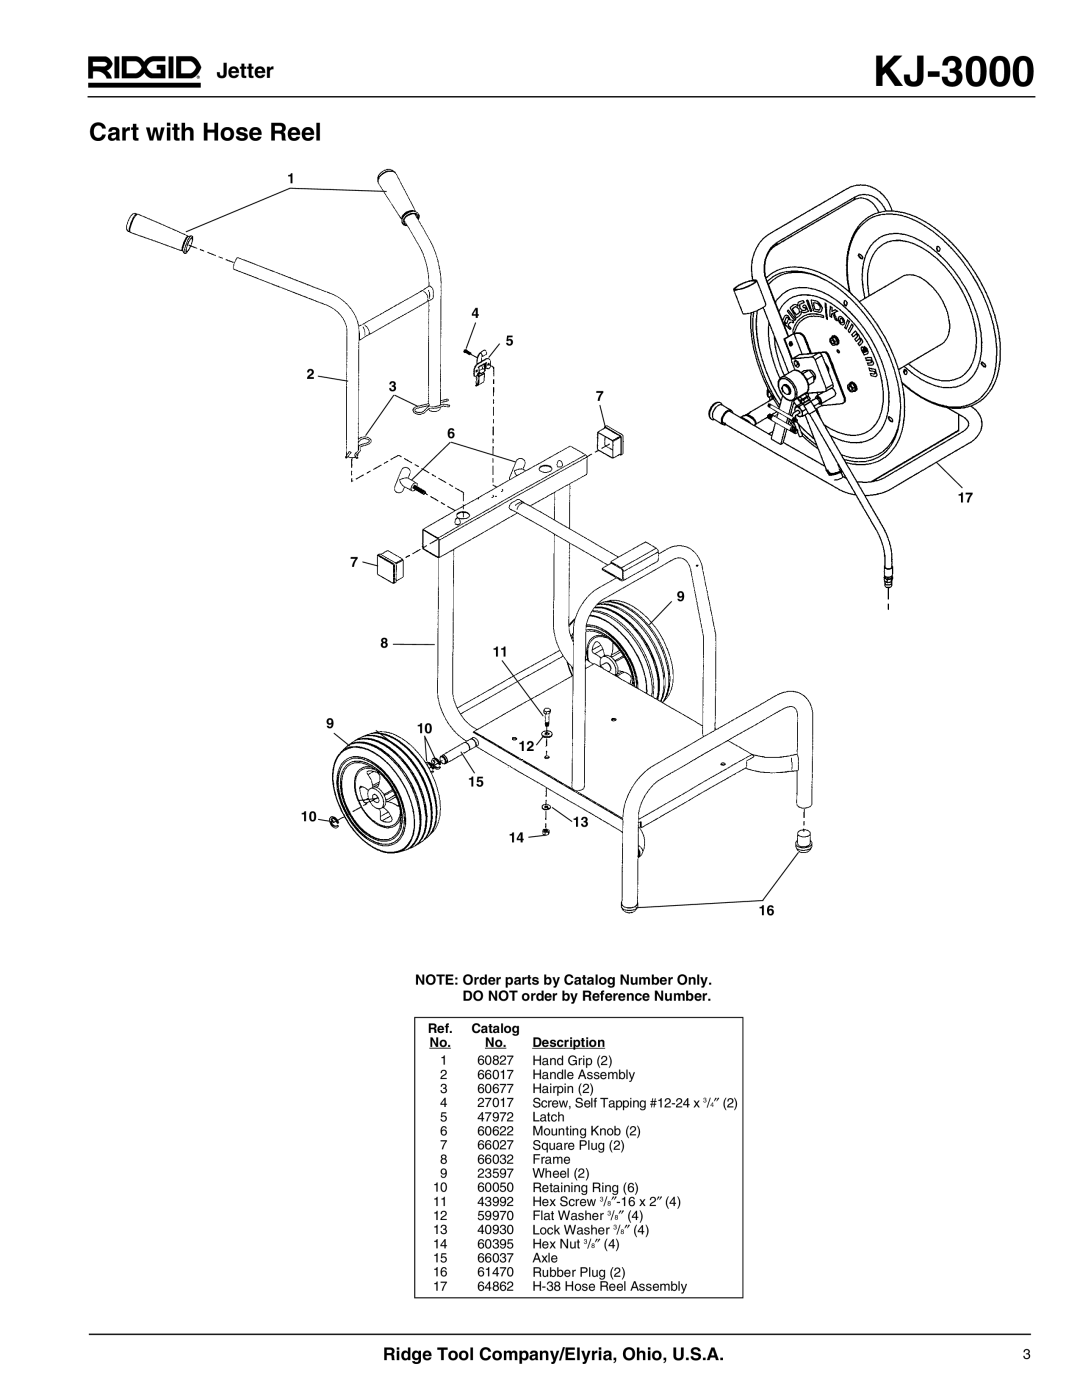 RIDGID KJ-3000 manual Cart with Hose Reel, Jetter, Ridge Tool Company/Elyria, Ohio, U.S.A 